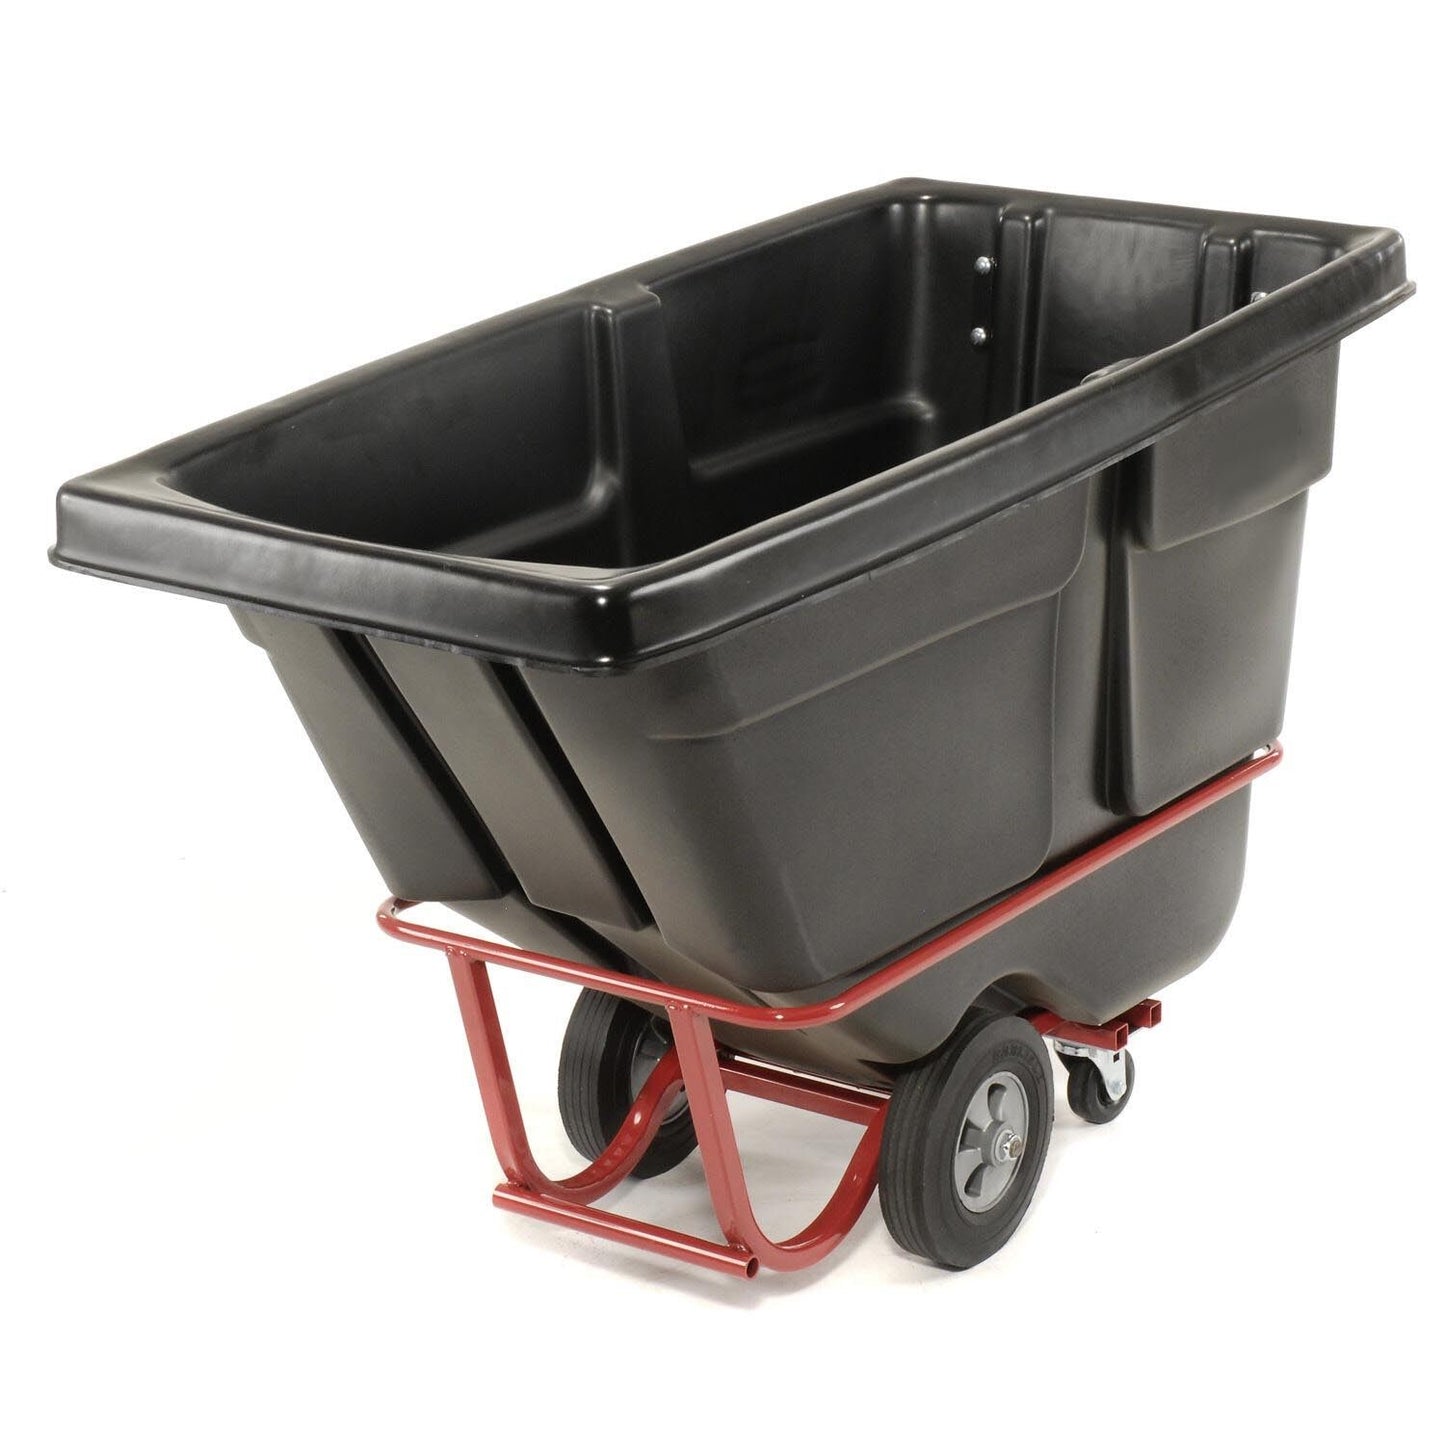 Tilt TRASH BIN - 1400 lbs Capacity - 1/2 Cubic Yard - Portable - Waste - Garbage